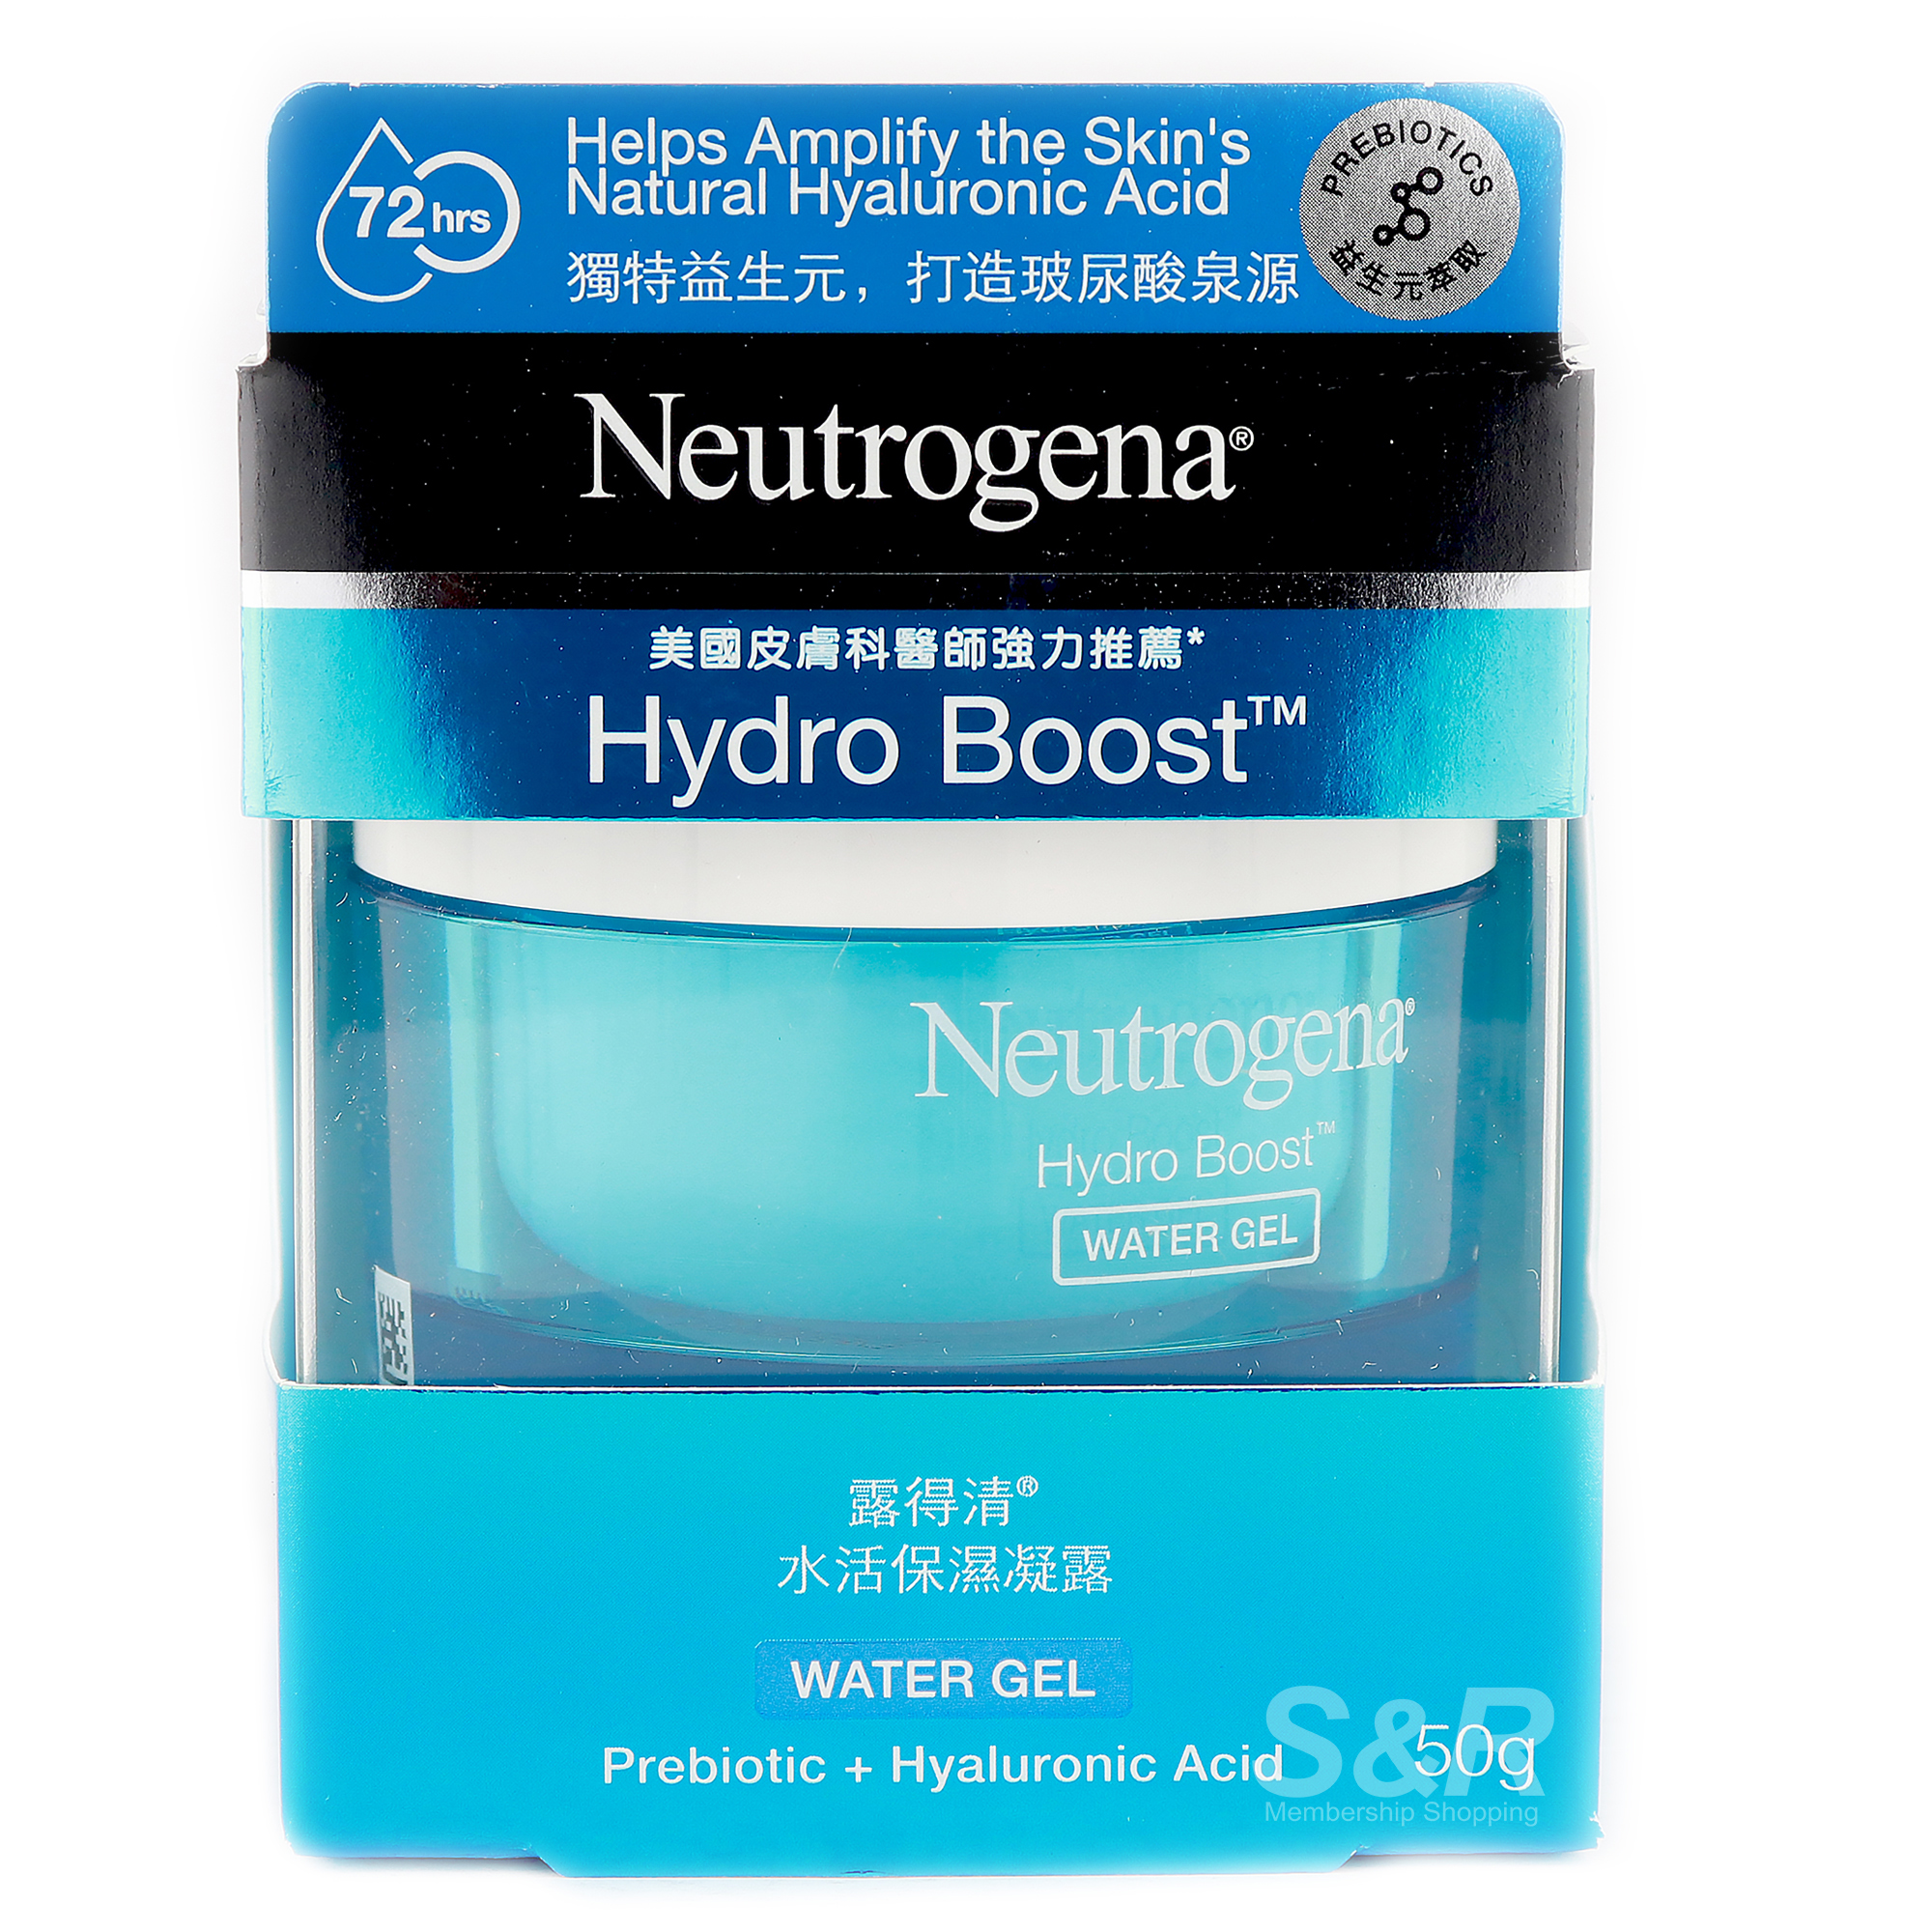 Neutrogena Hydroboost Water Gel 50g